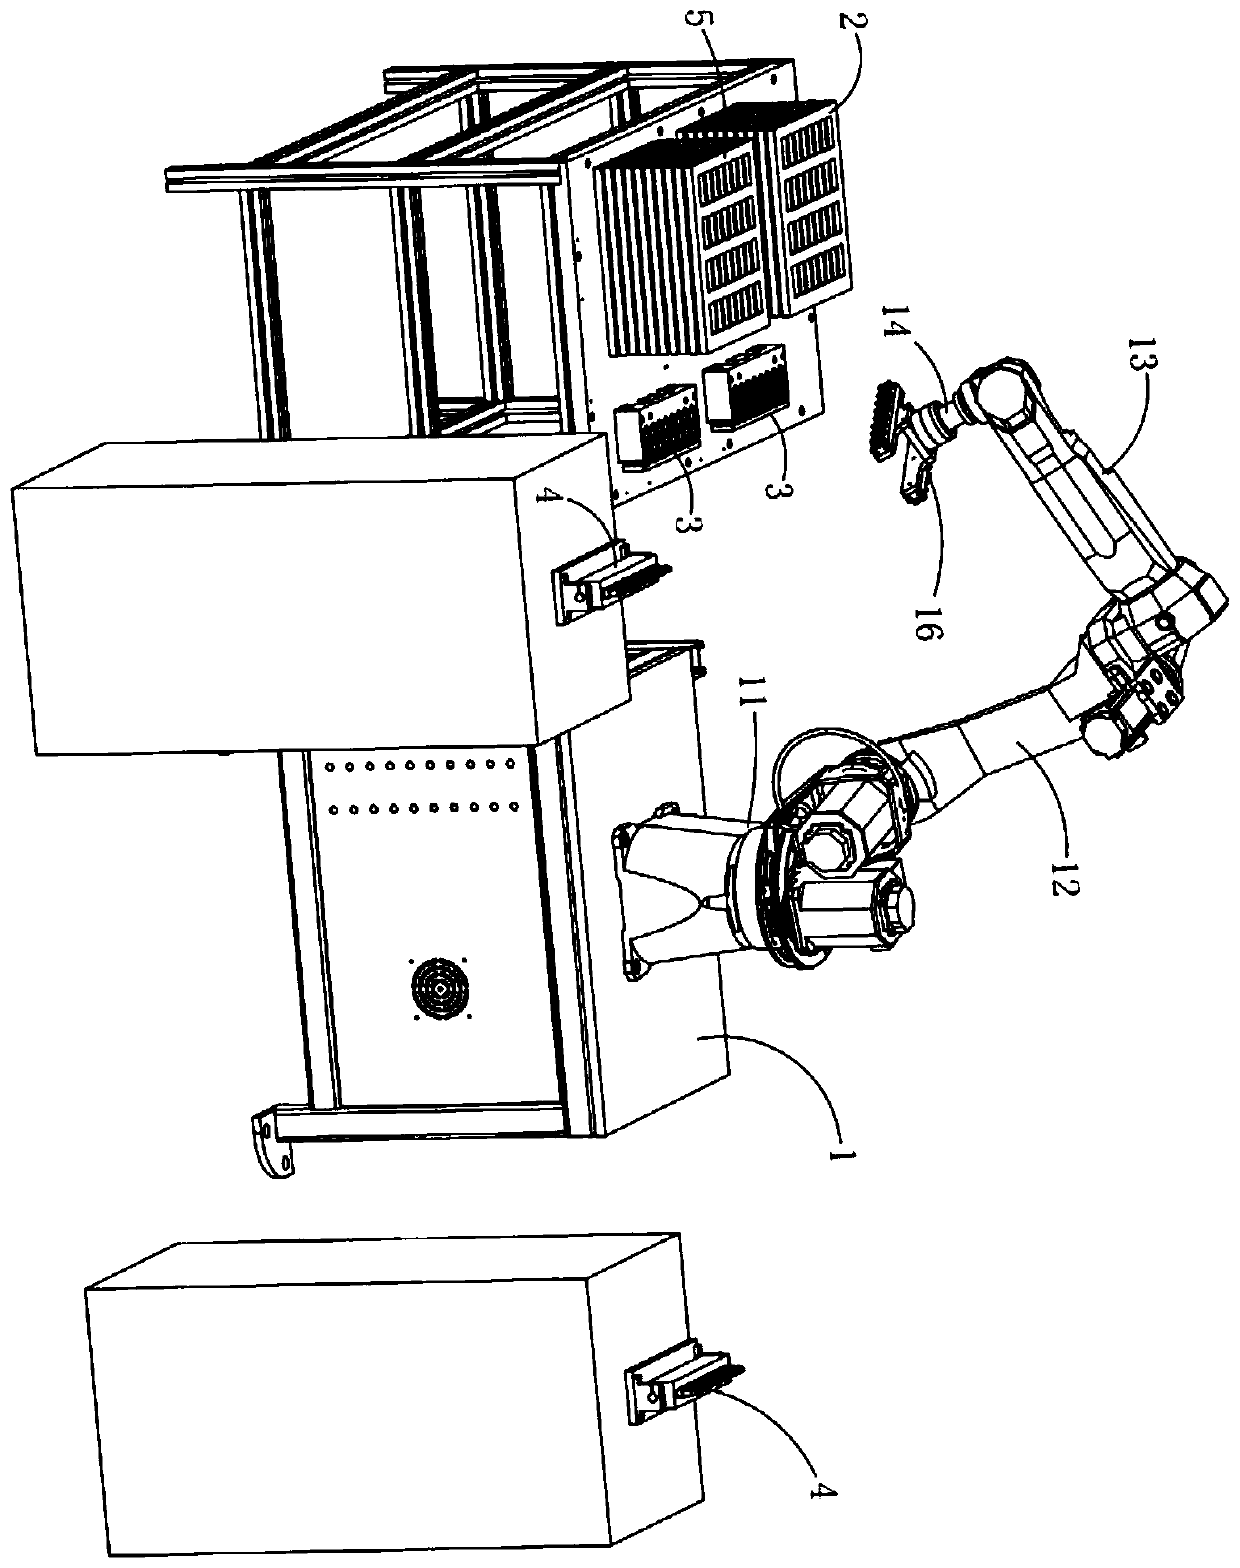 Multi-station flexible hardware machining center and machining method thereof